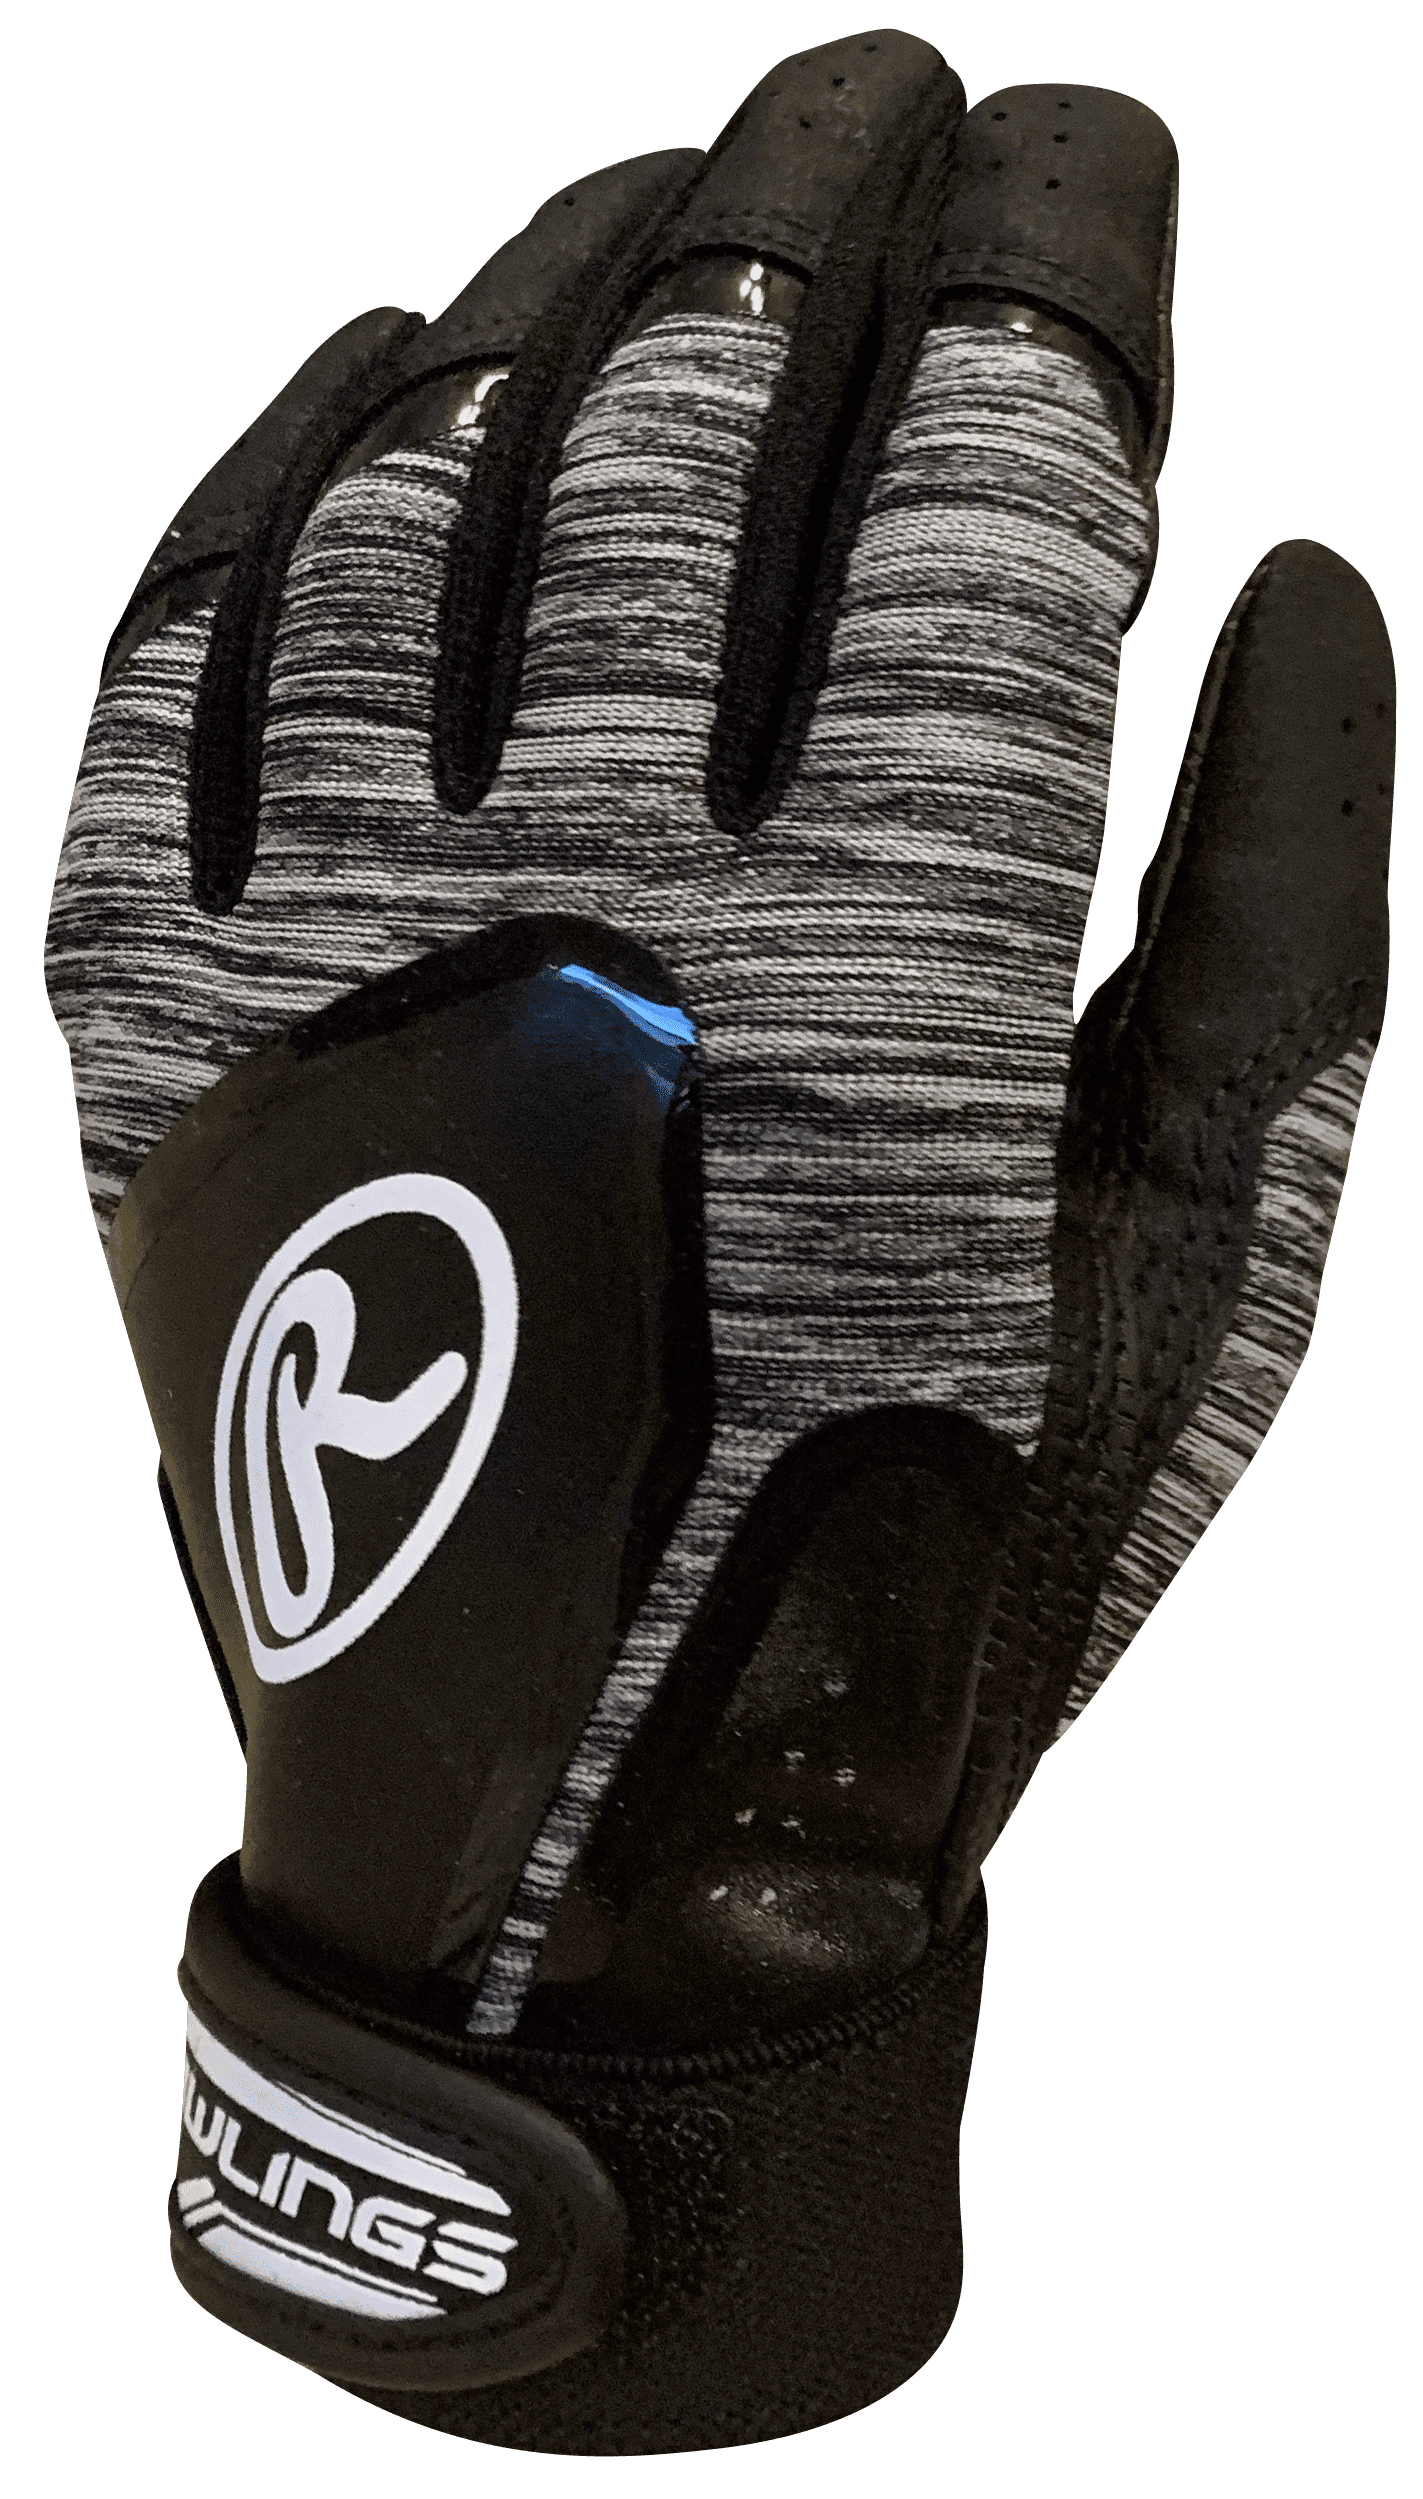 Rawlings Tball Batting Glove, Black (Ages 3-6)